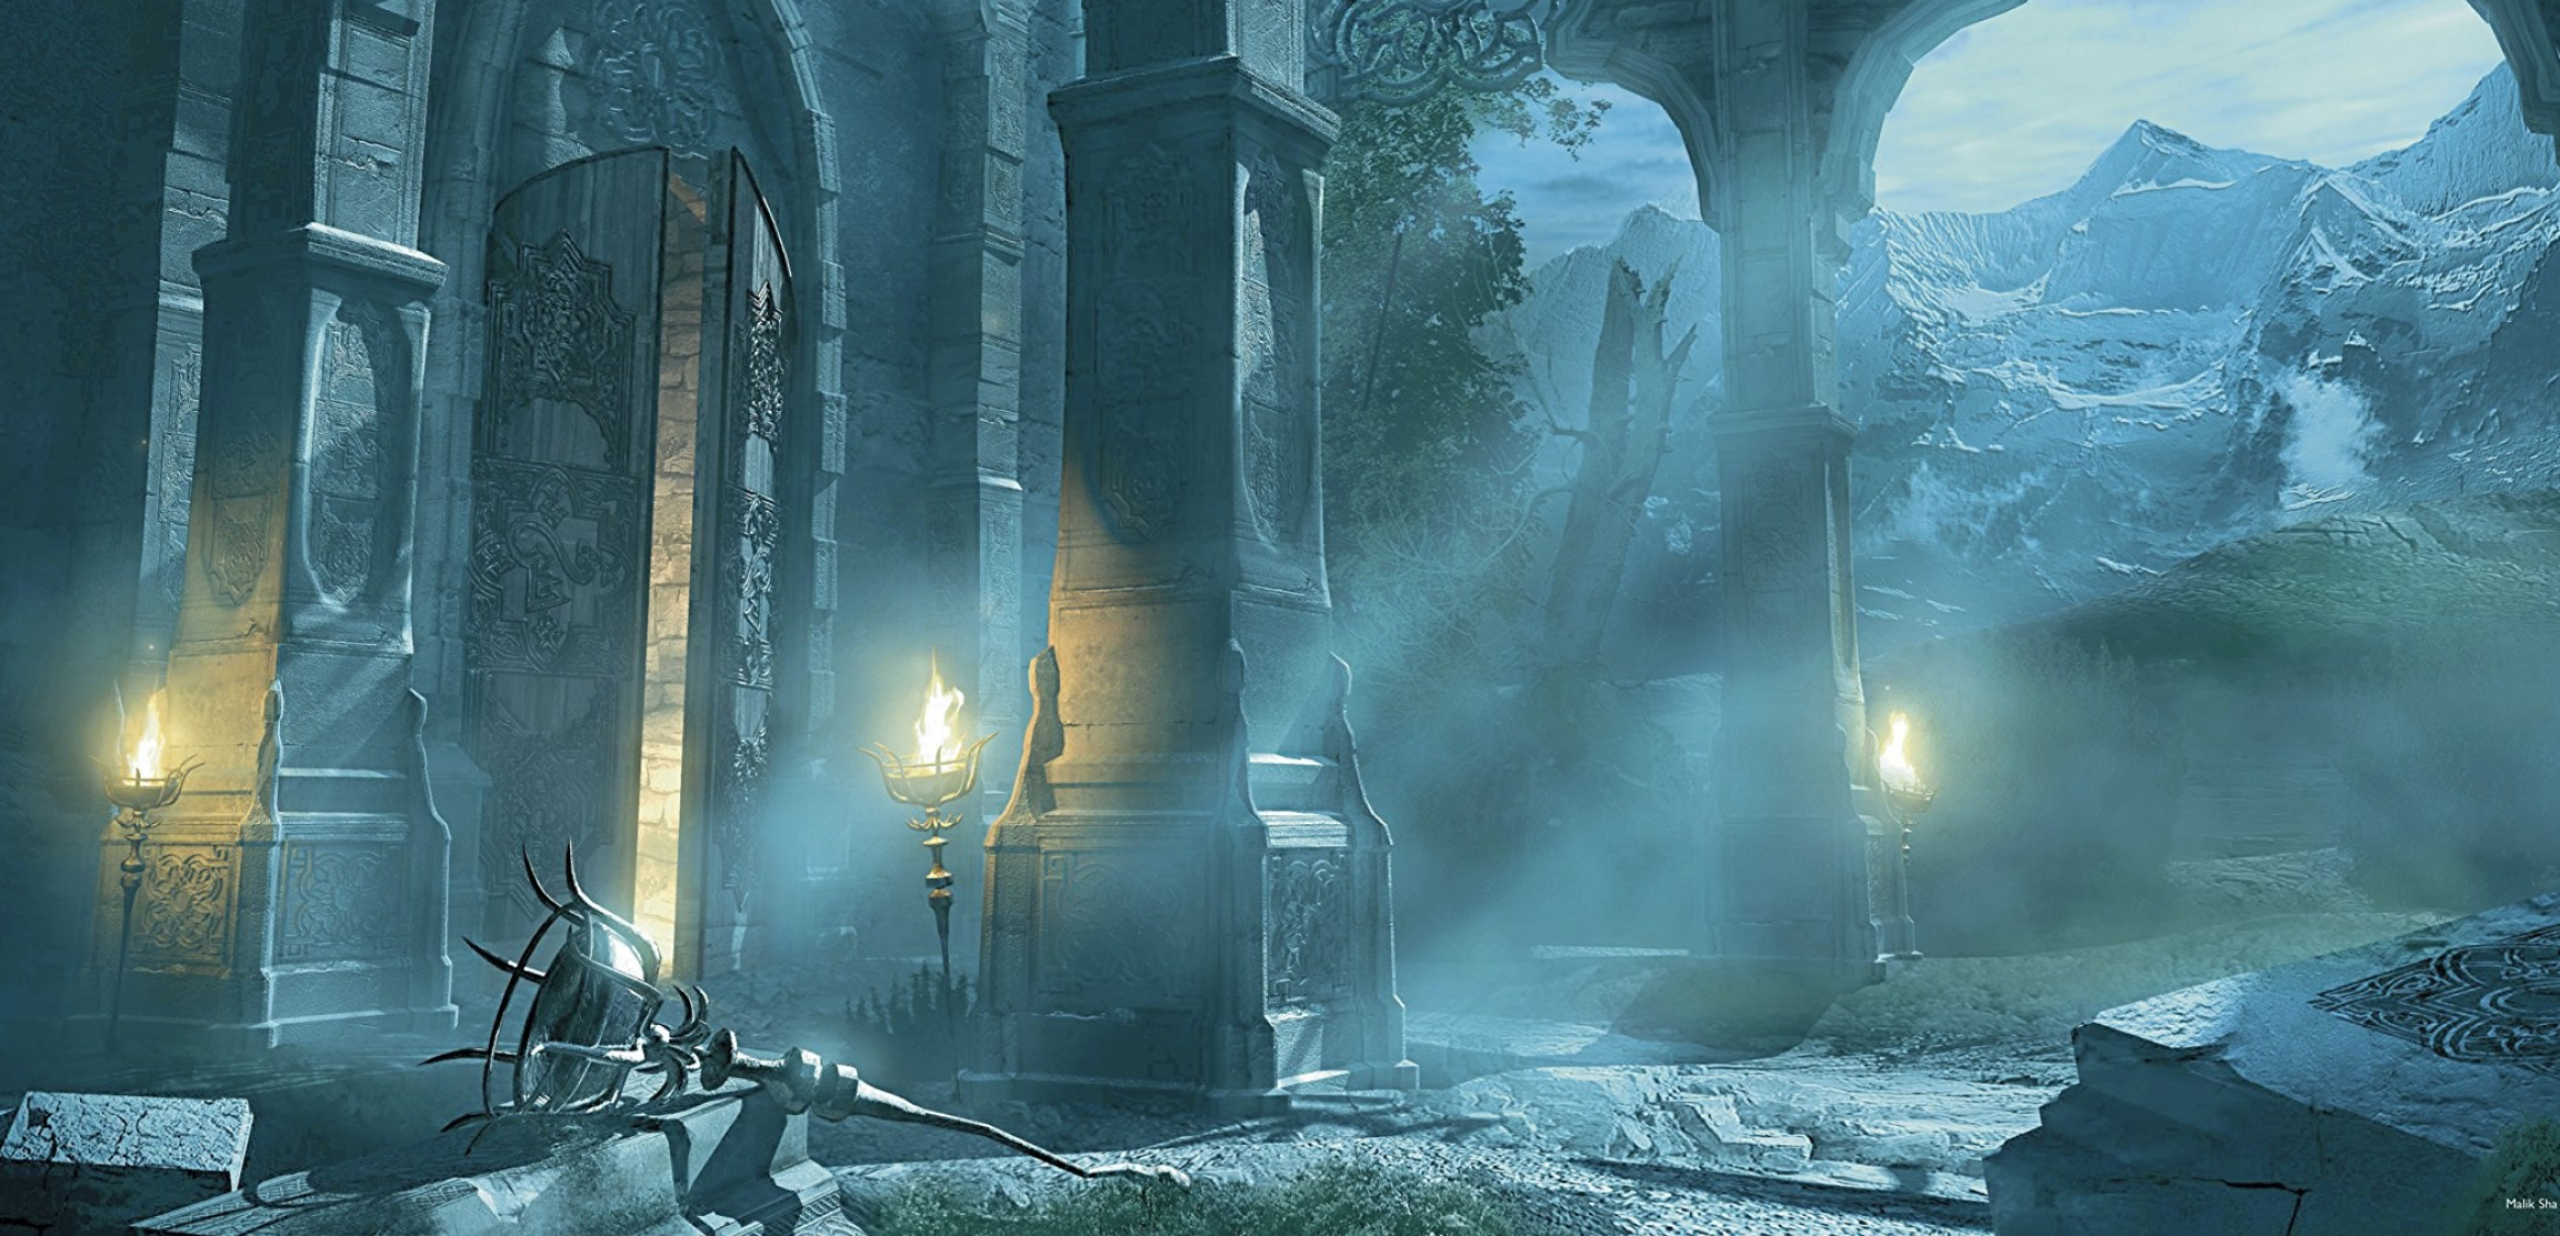 Gothic Art: Gothic atmosphere, Mist, Illustration, Temple, Ruins, Goths. 2560x1240 Dual Screen Wallpaper.